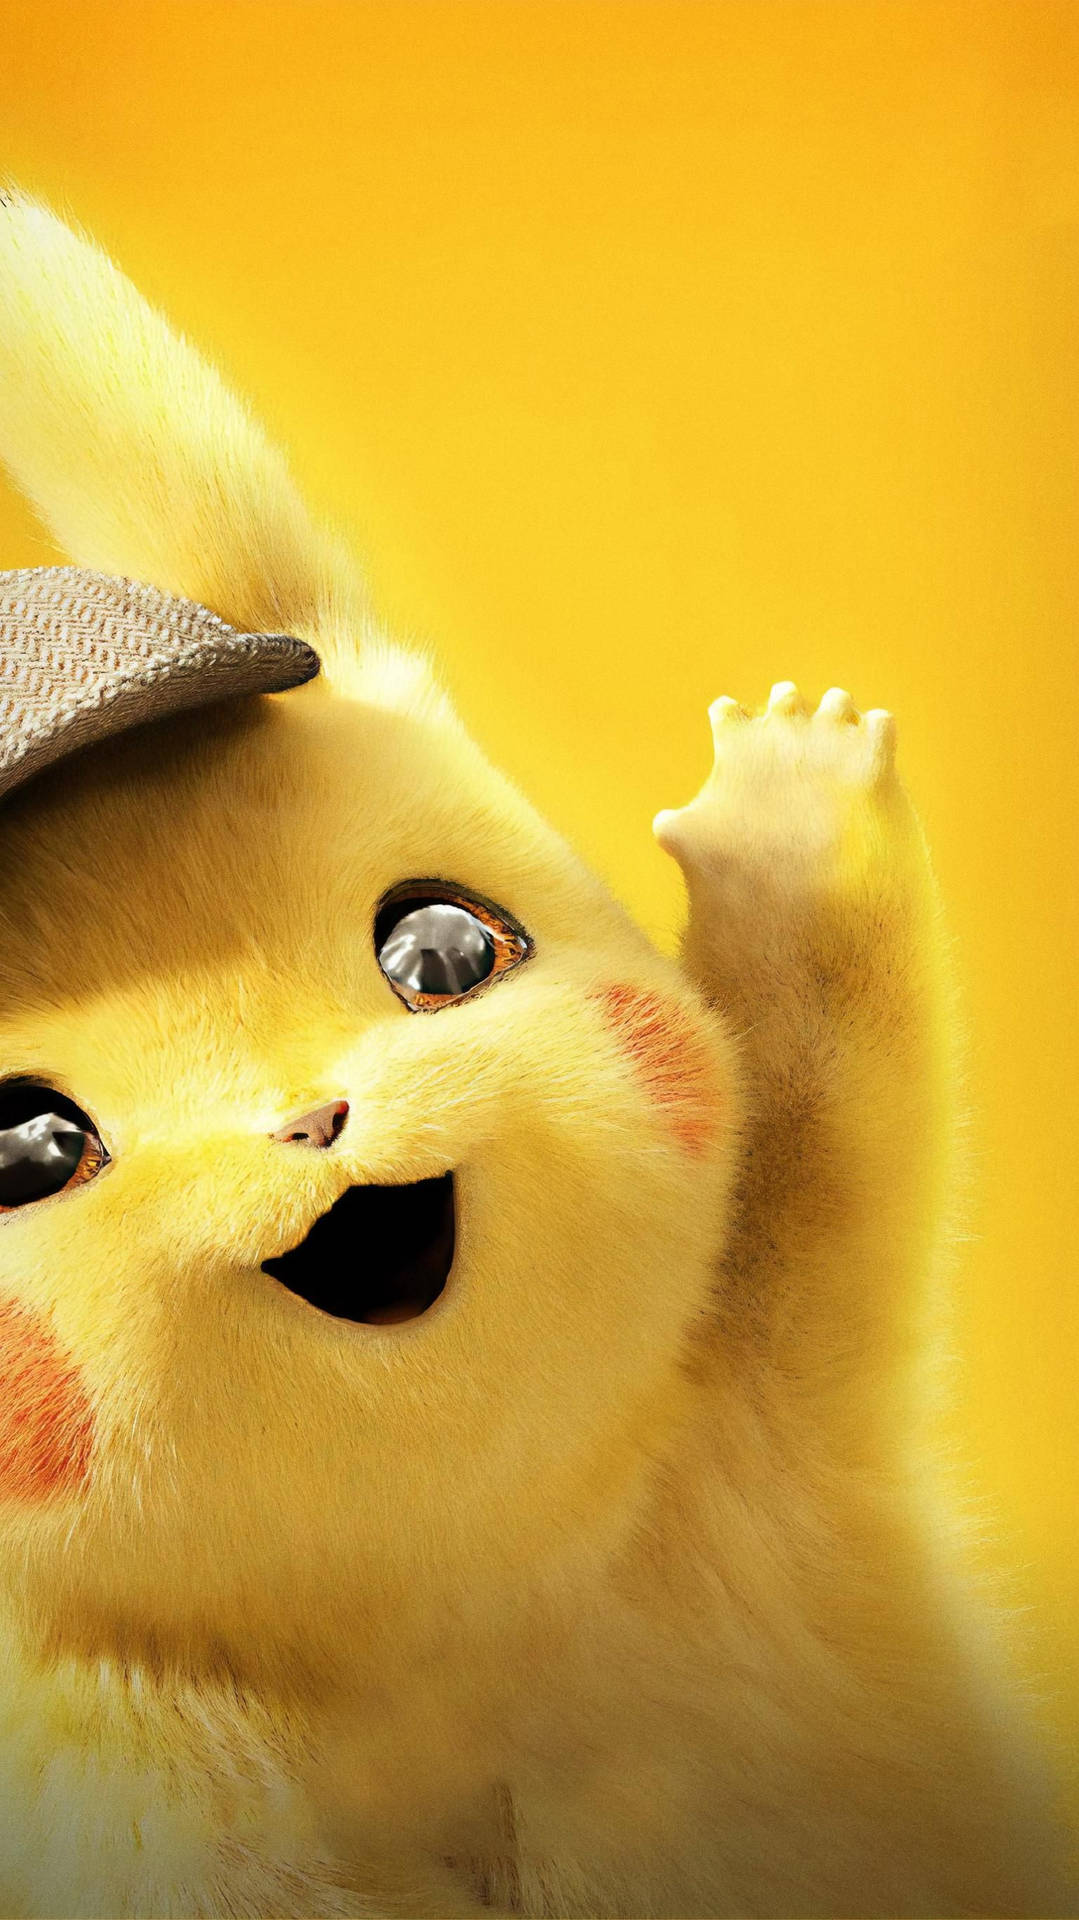 Pikachu Adorable Photo